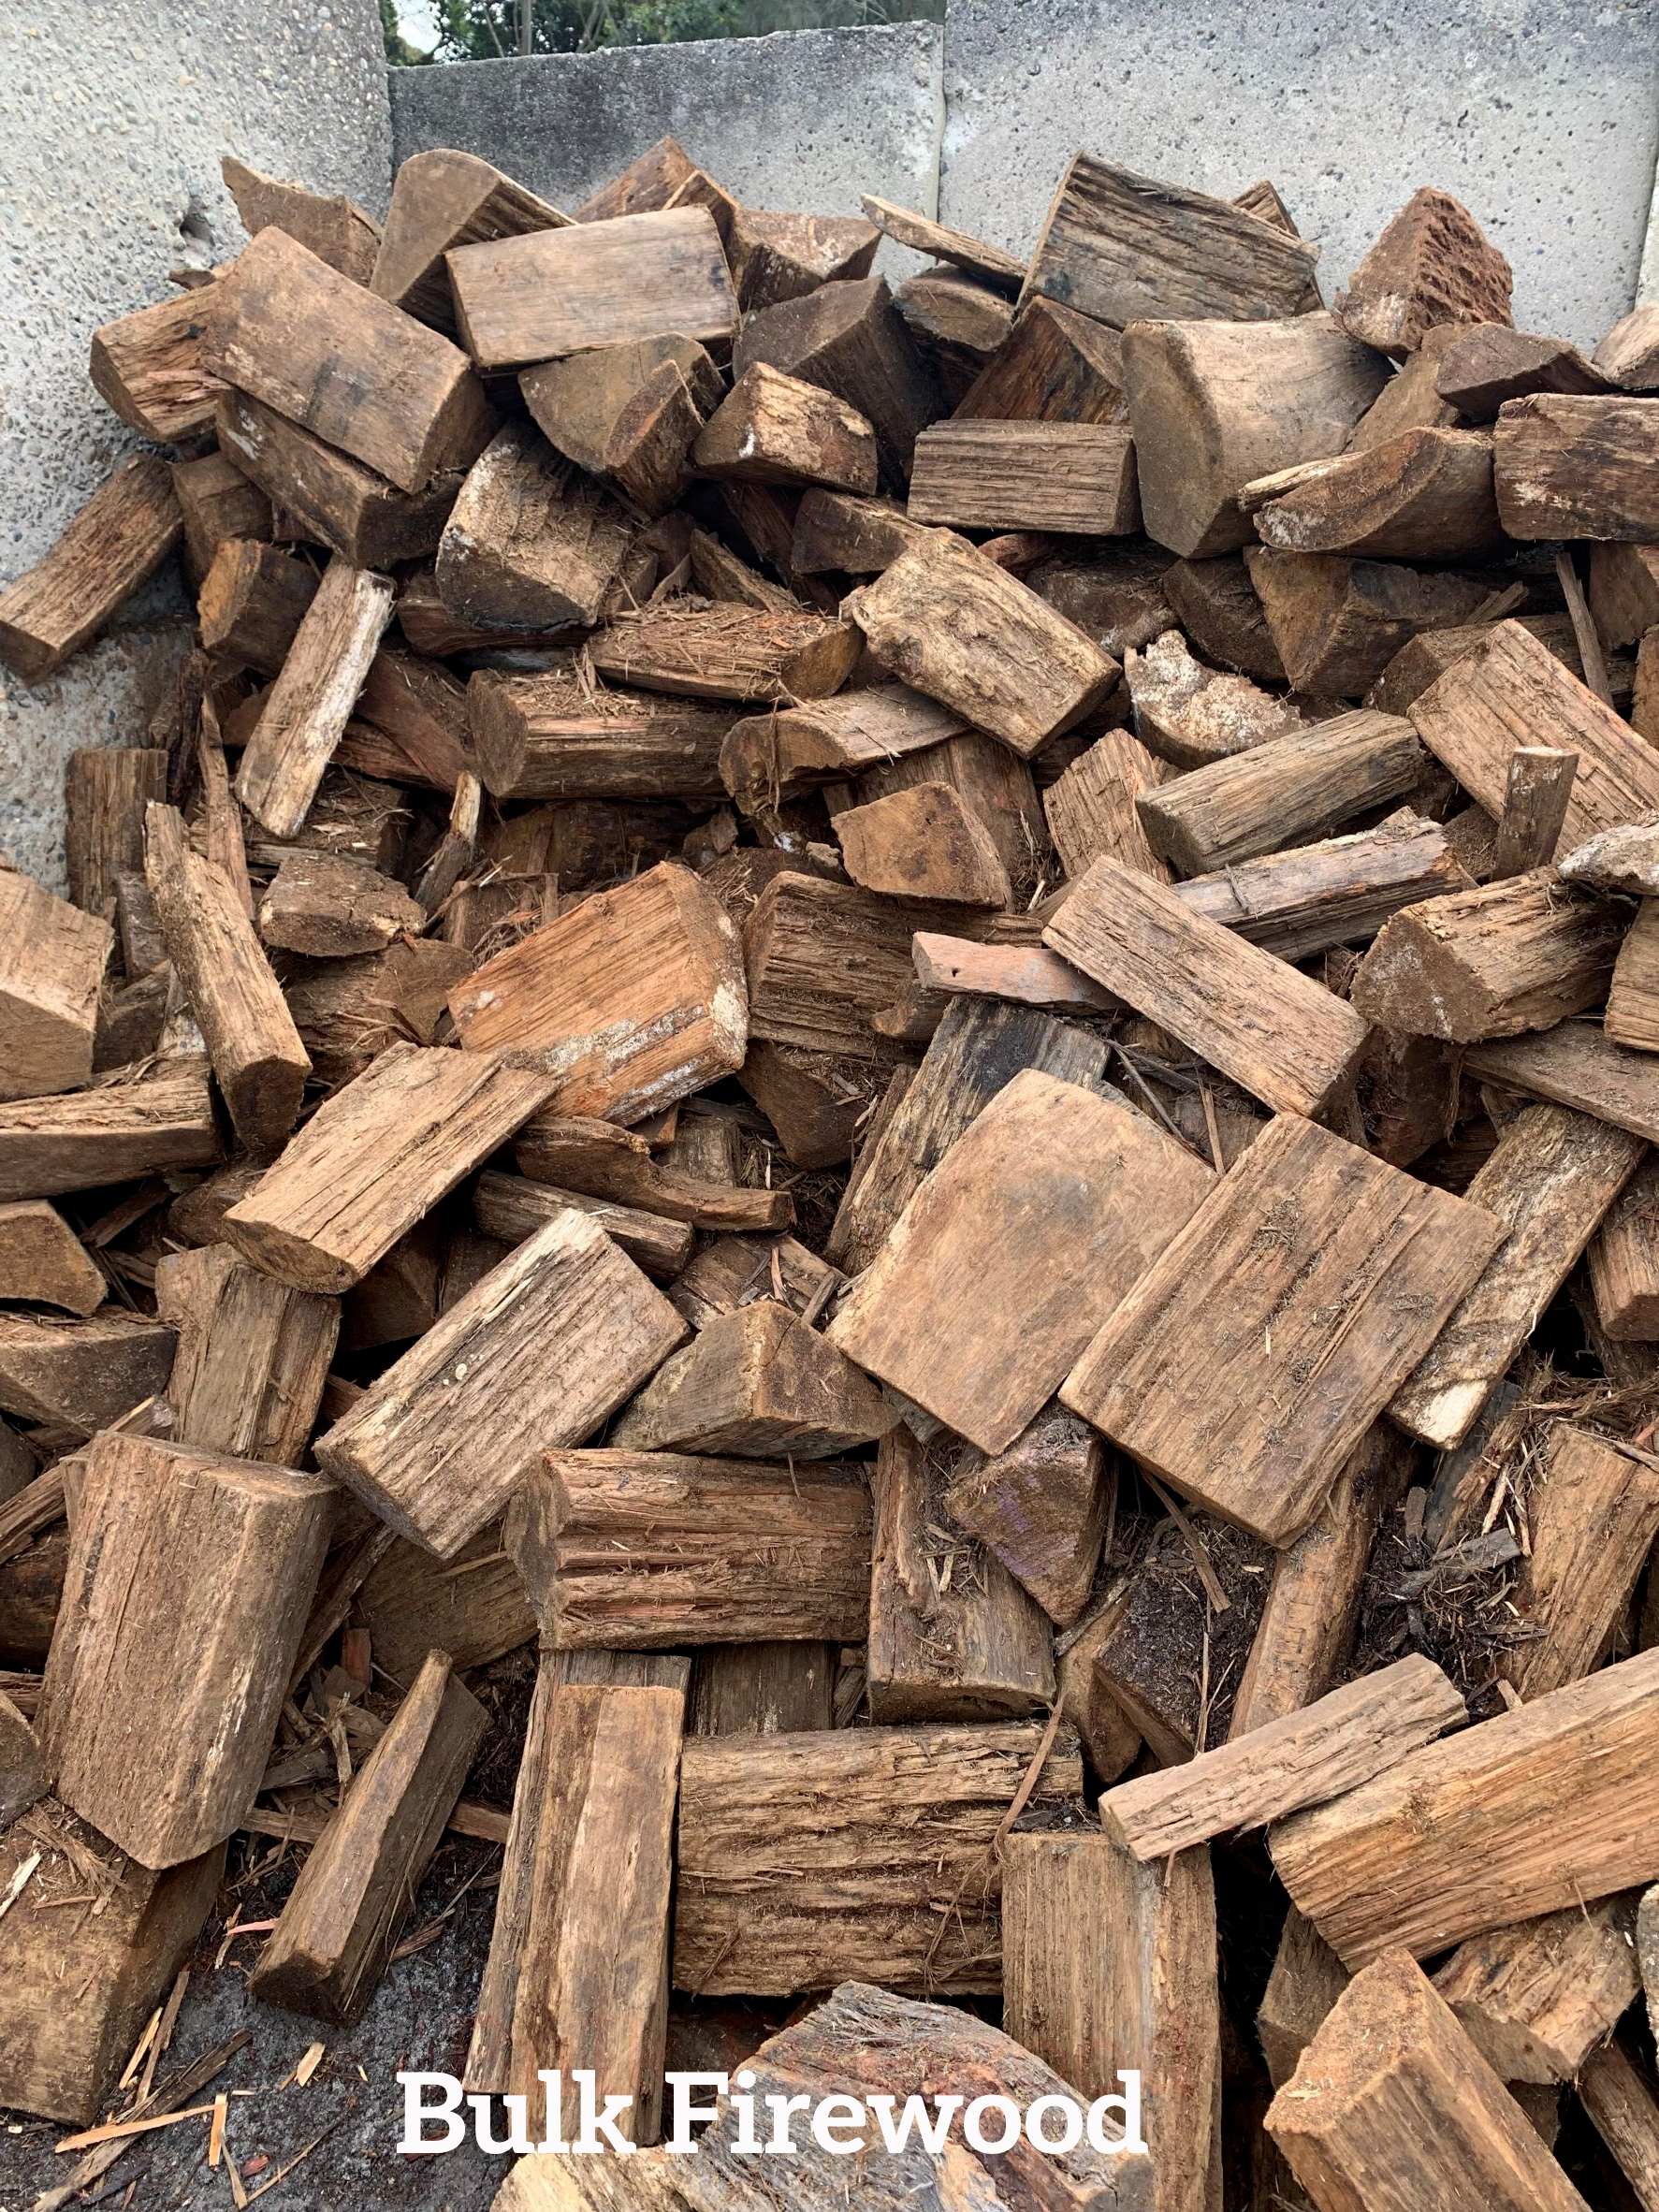 Bulk Firewood — Landscaping Supplies in Maclean, NSW